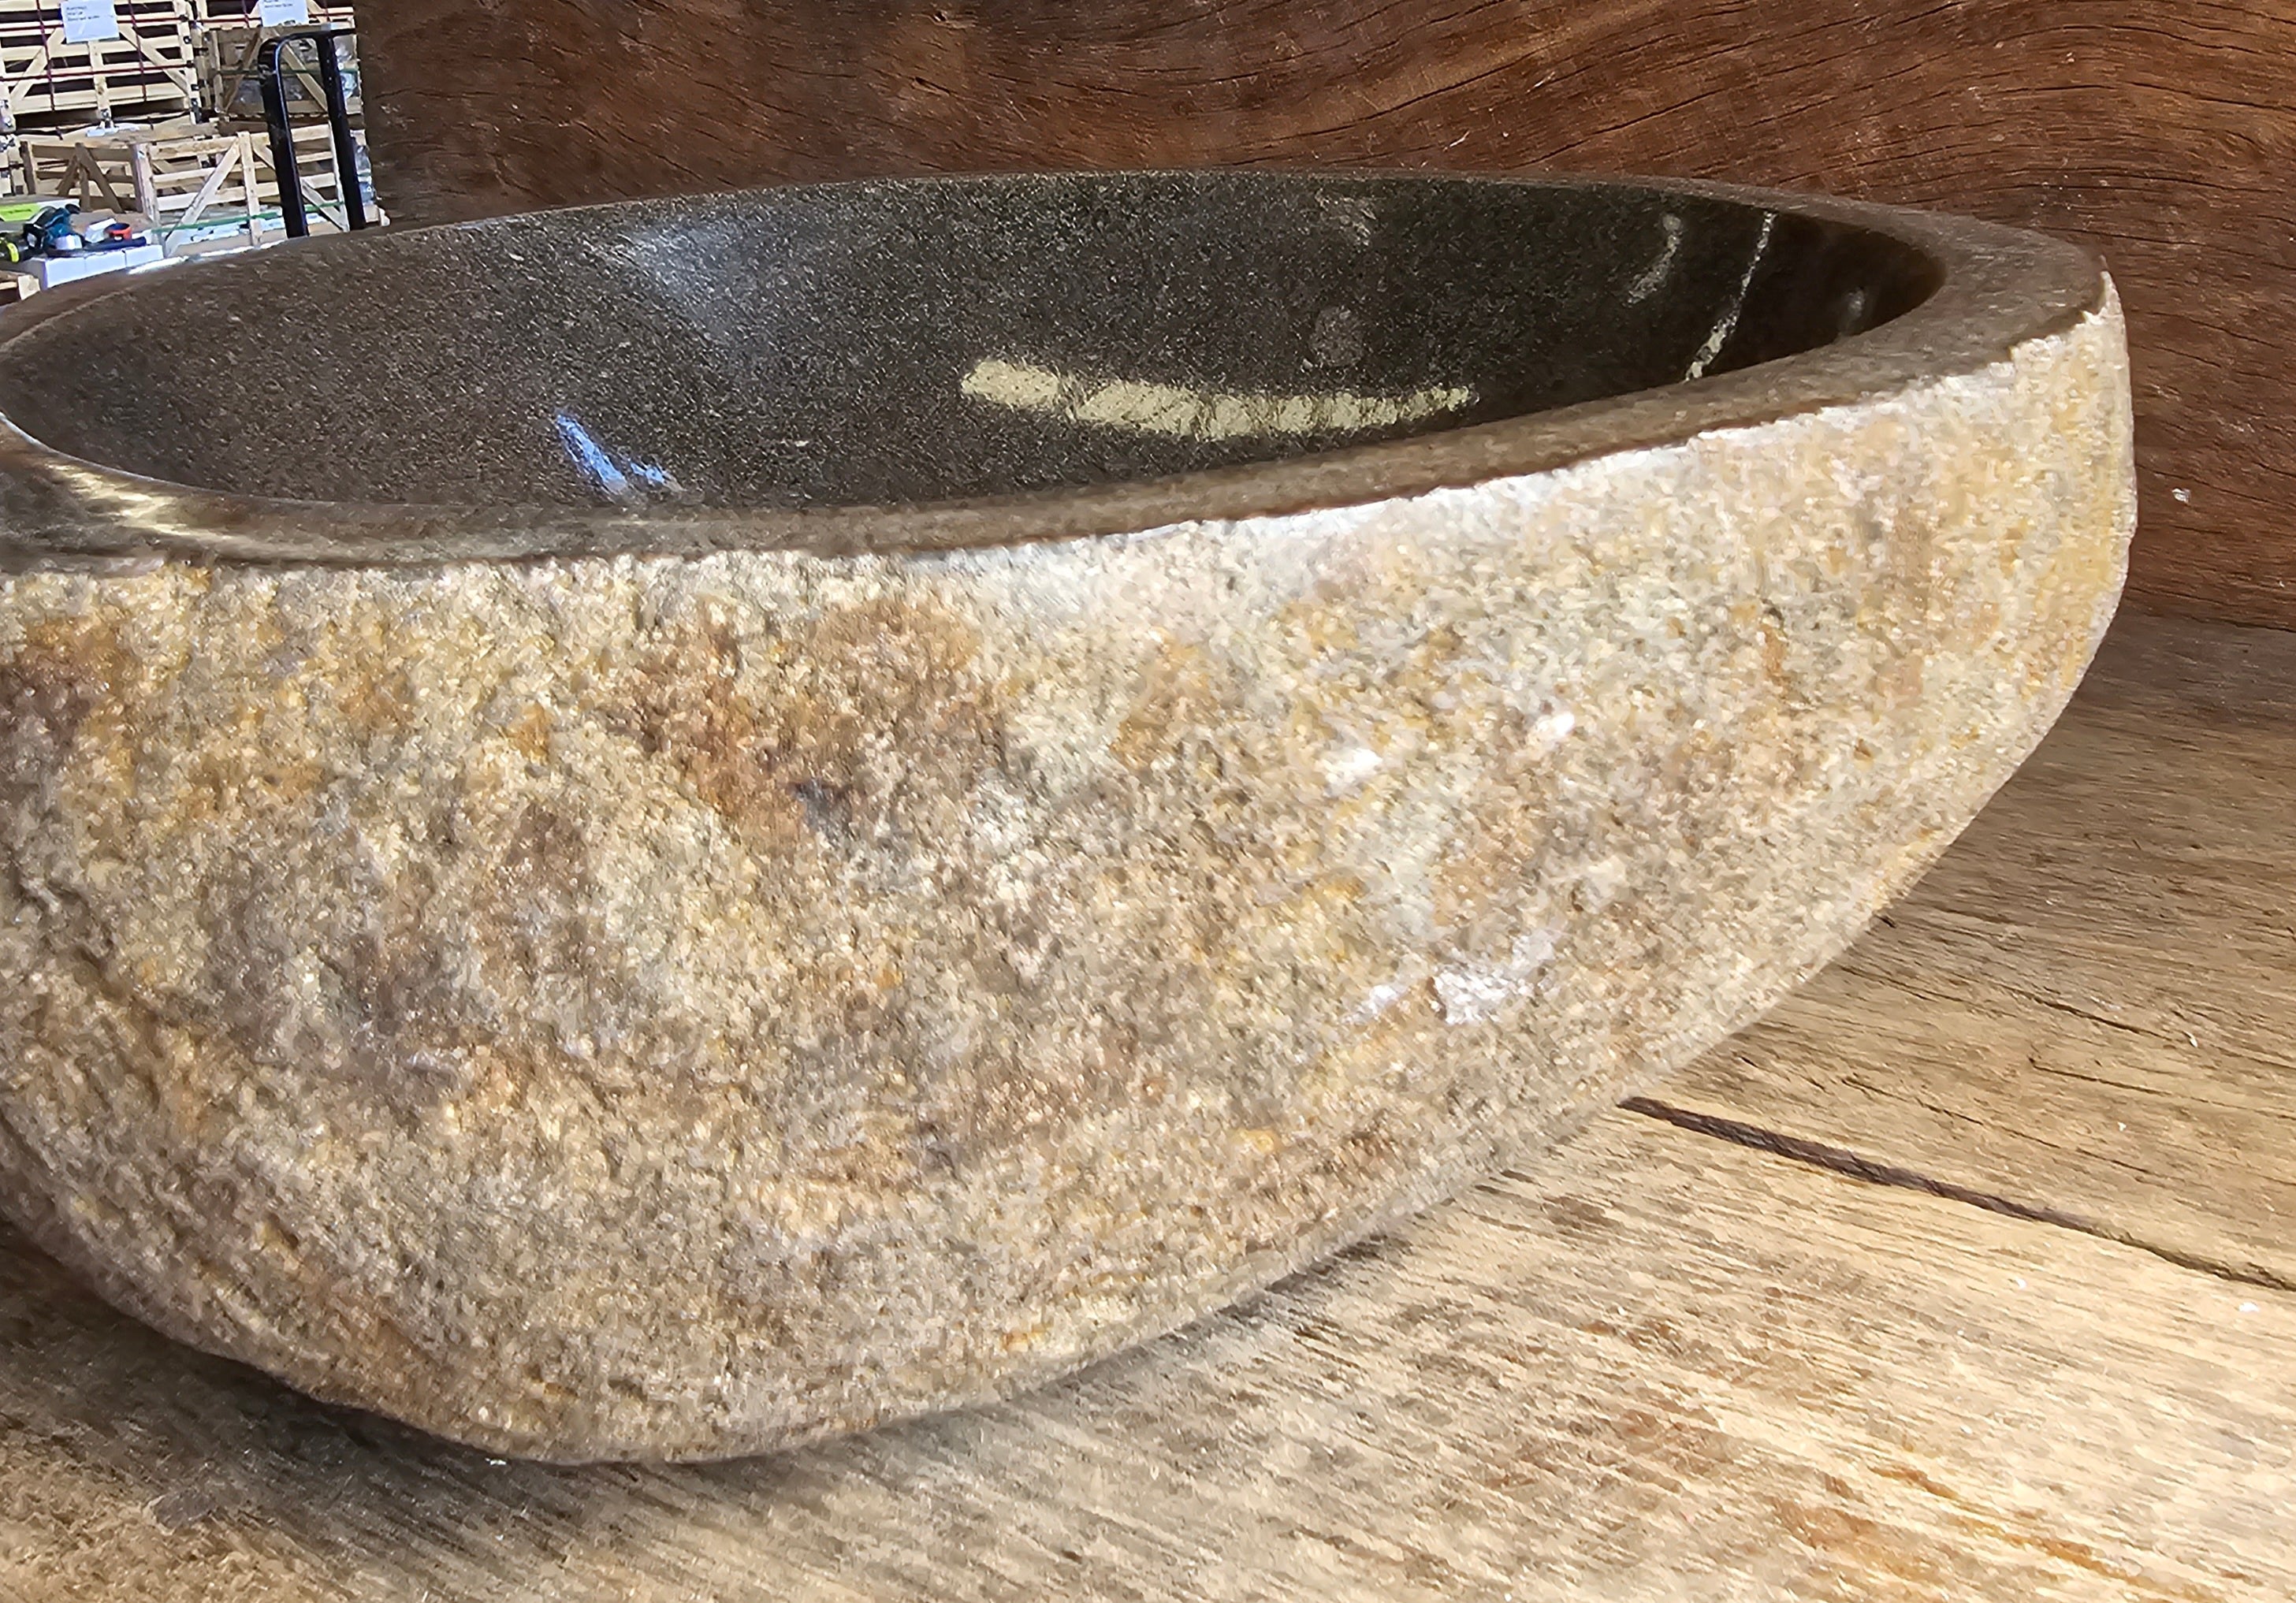 Handmade Natural Oval River Stone Bathroom Basin - RXS 2306002